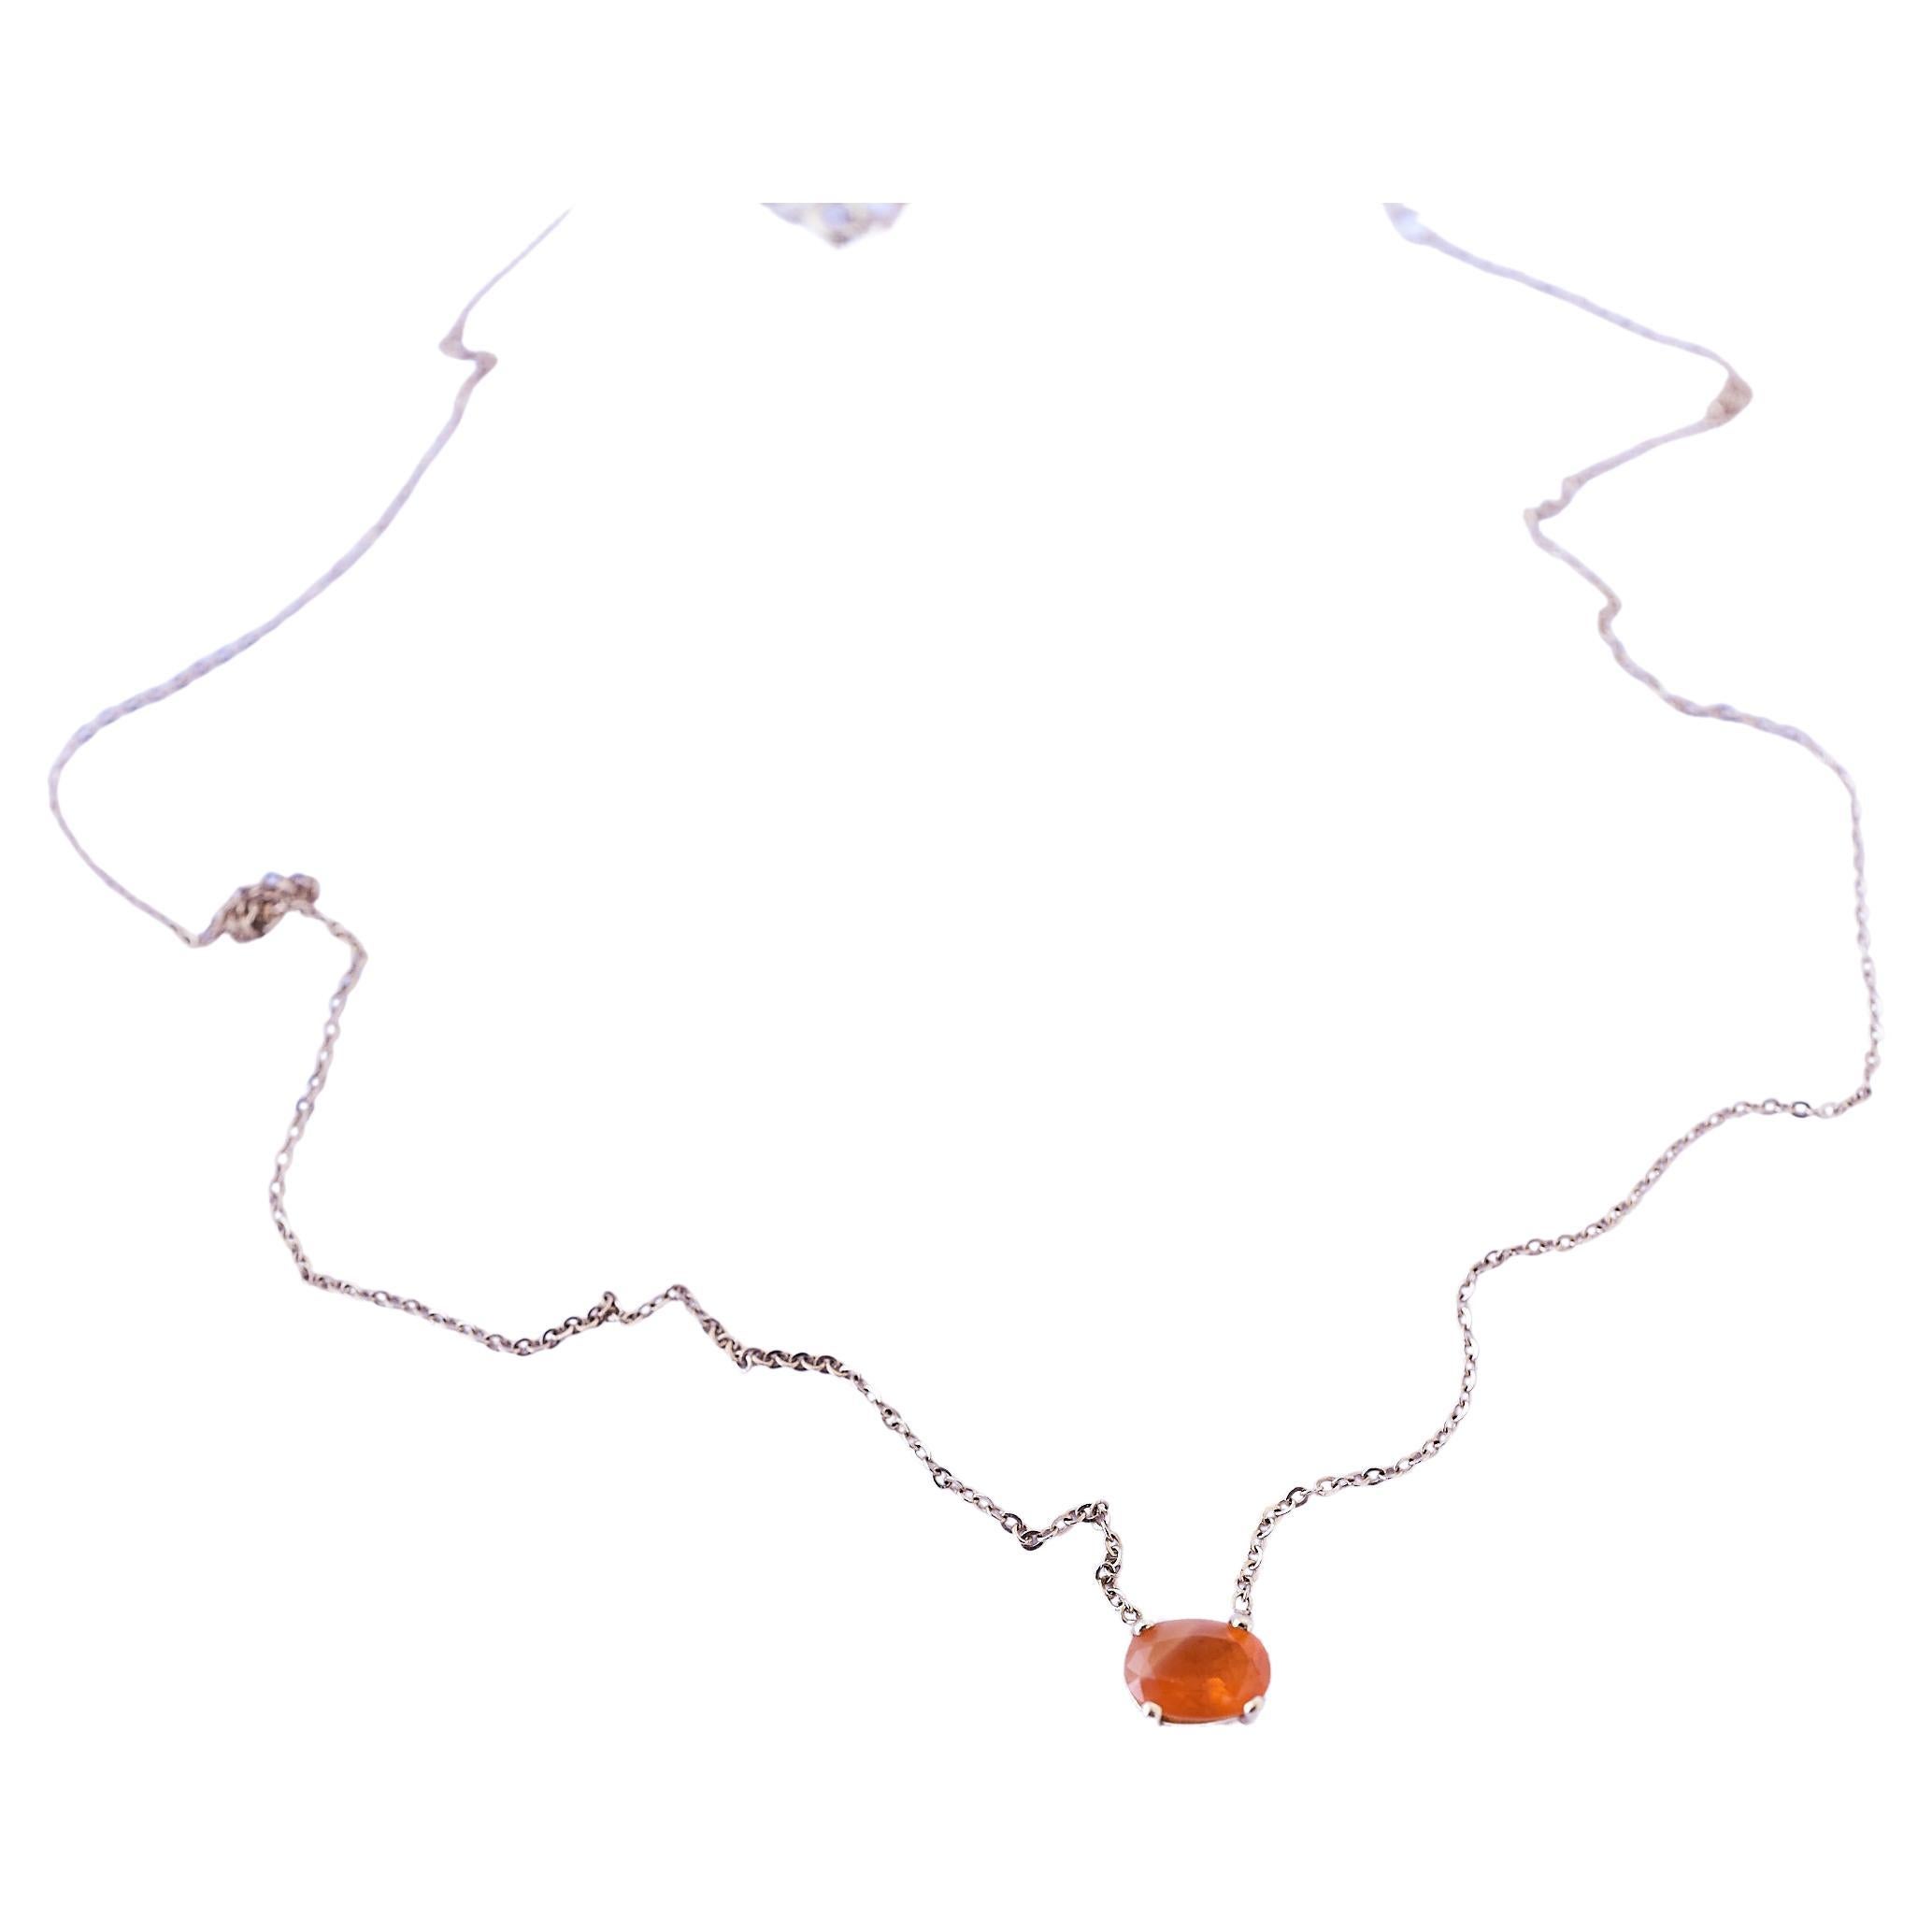 Fire Opal Gold Chain Necklace Choker 
Metal 14 k gold
Length: Adjustable 16